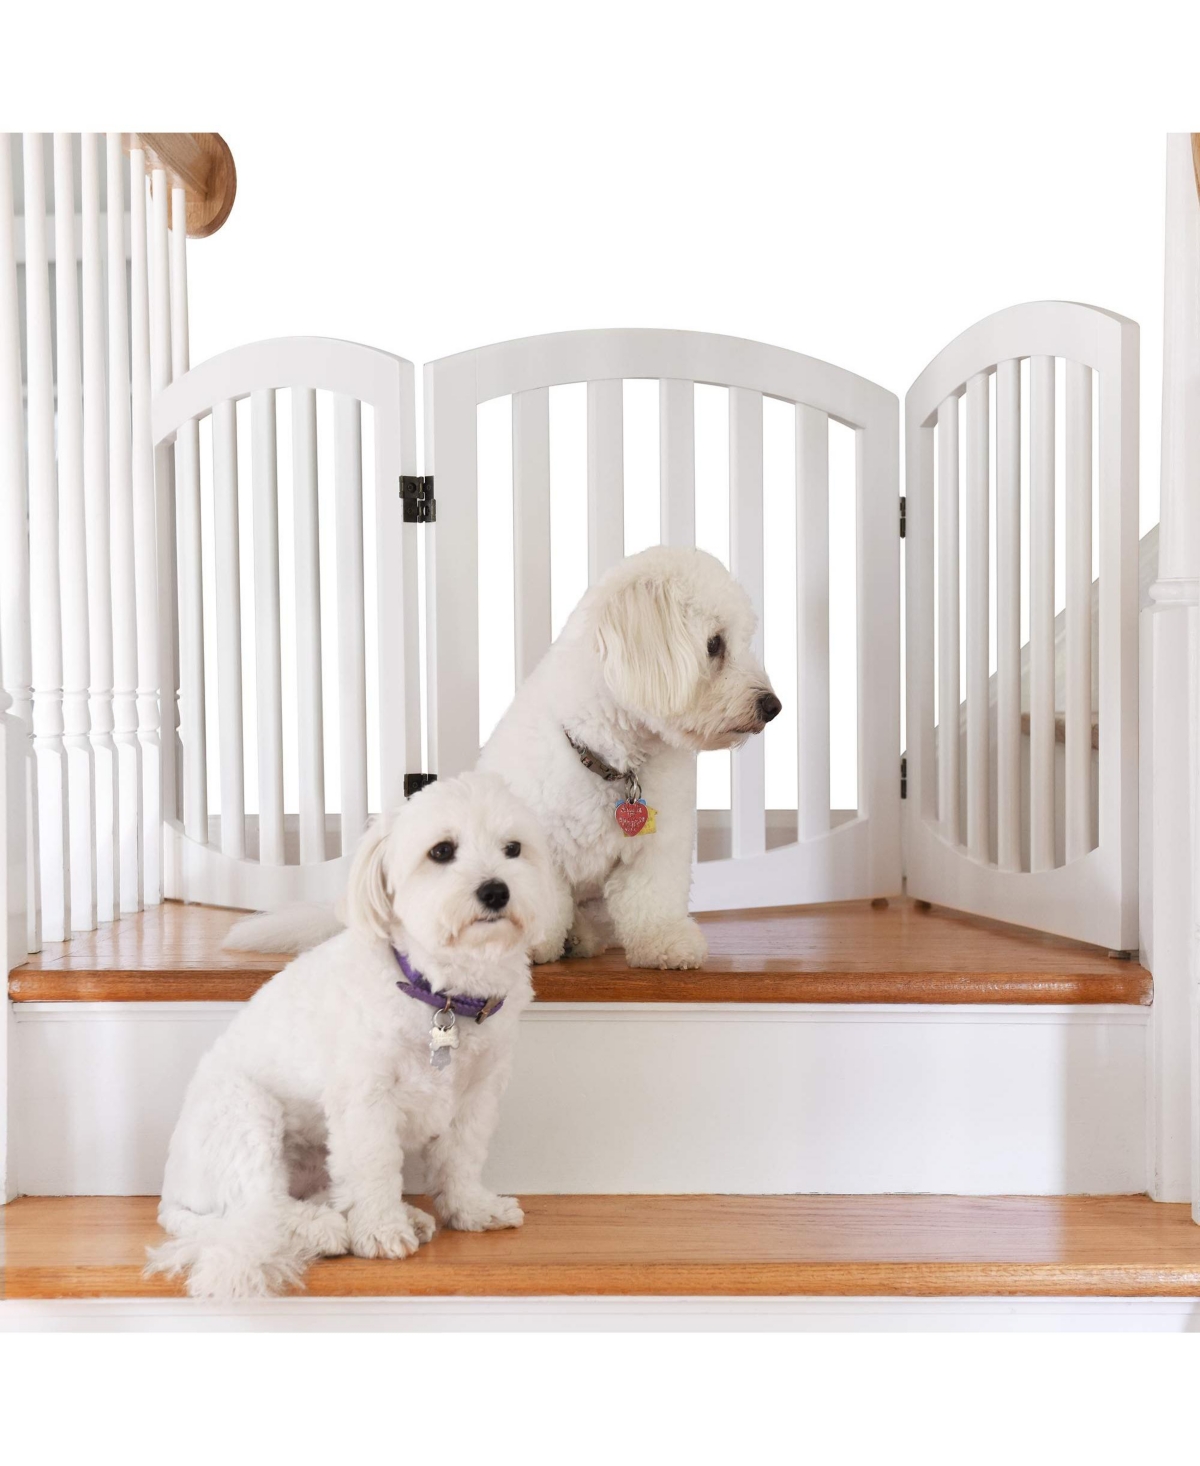 3-Panel Freestanding Dog Gate, Foldable Pet Gate for Home - White